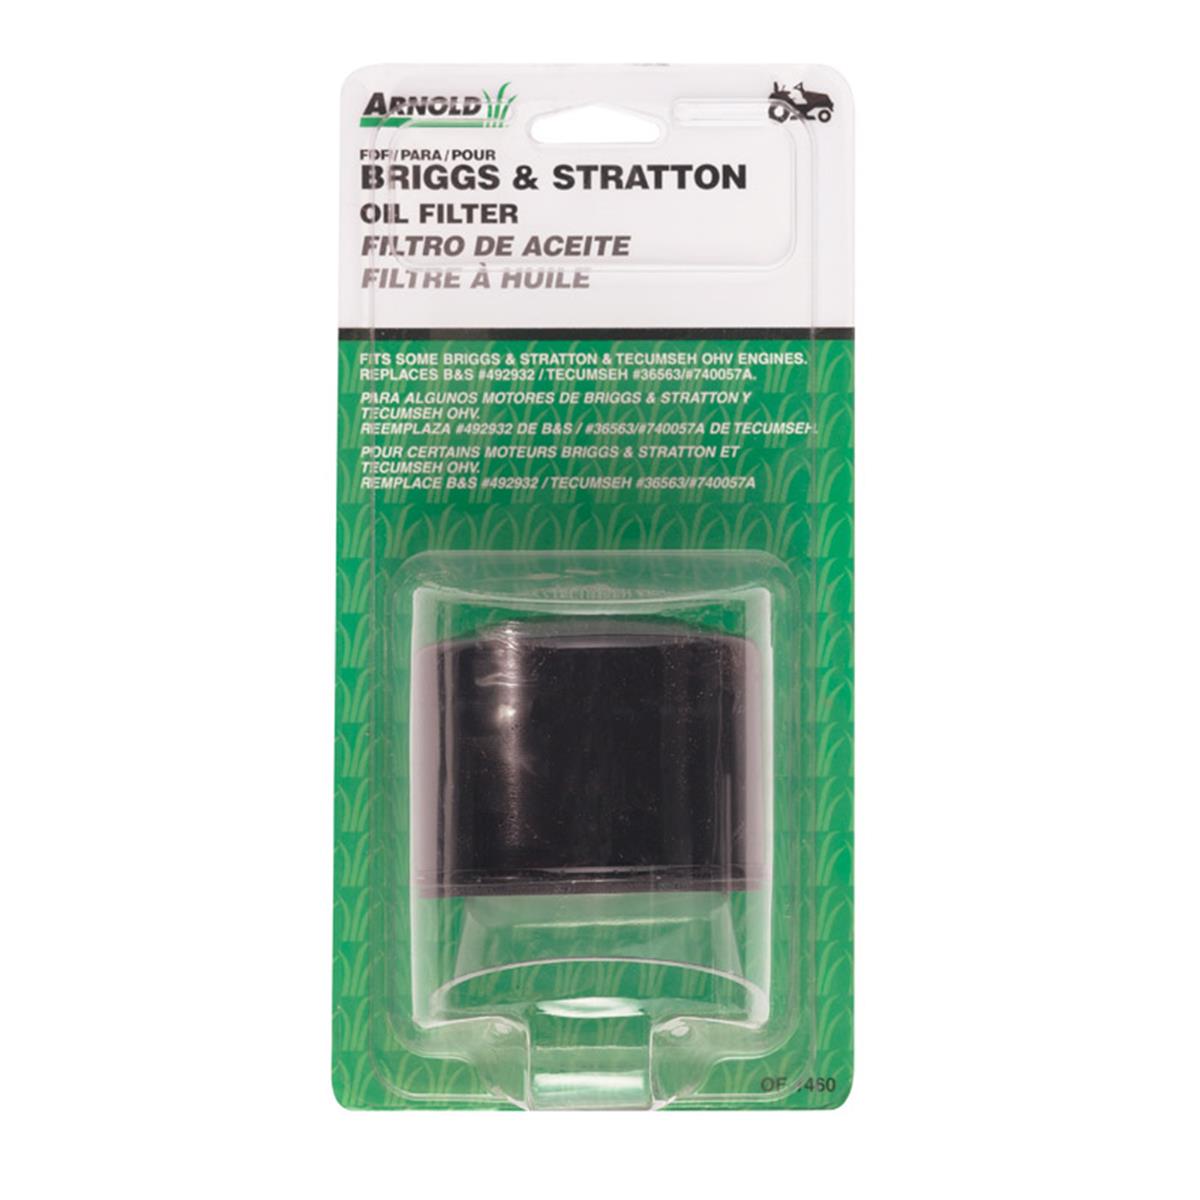 Of-1460 Oil Filter For Briggs & Stratton